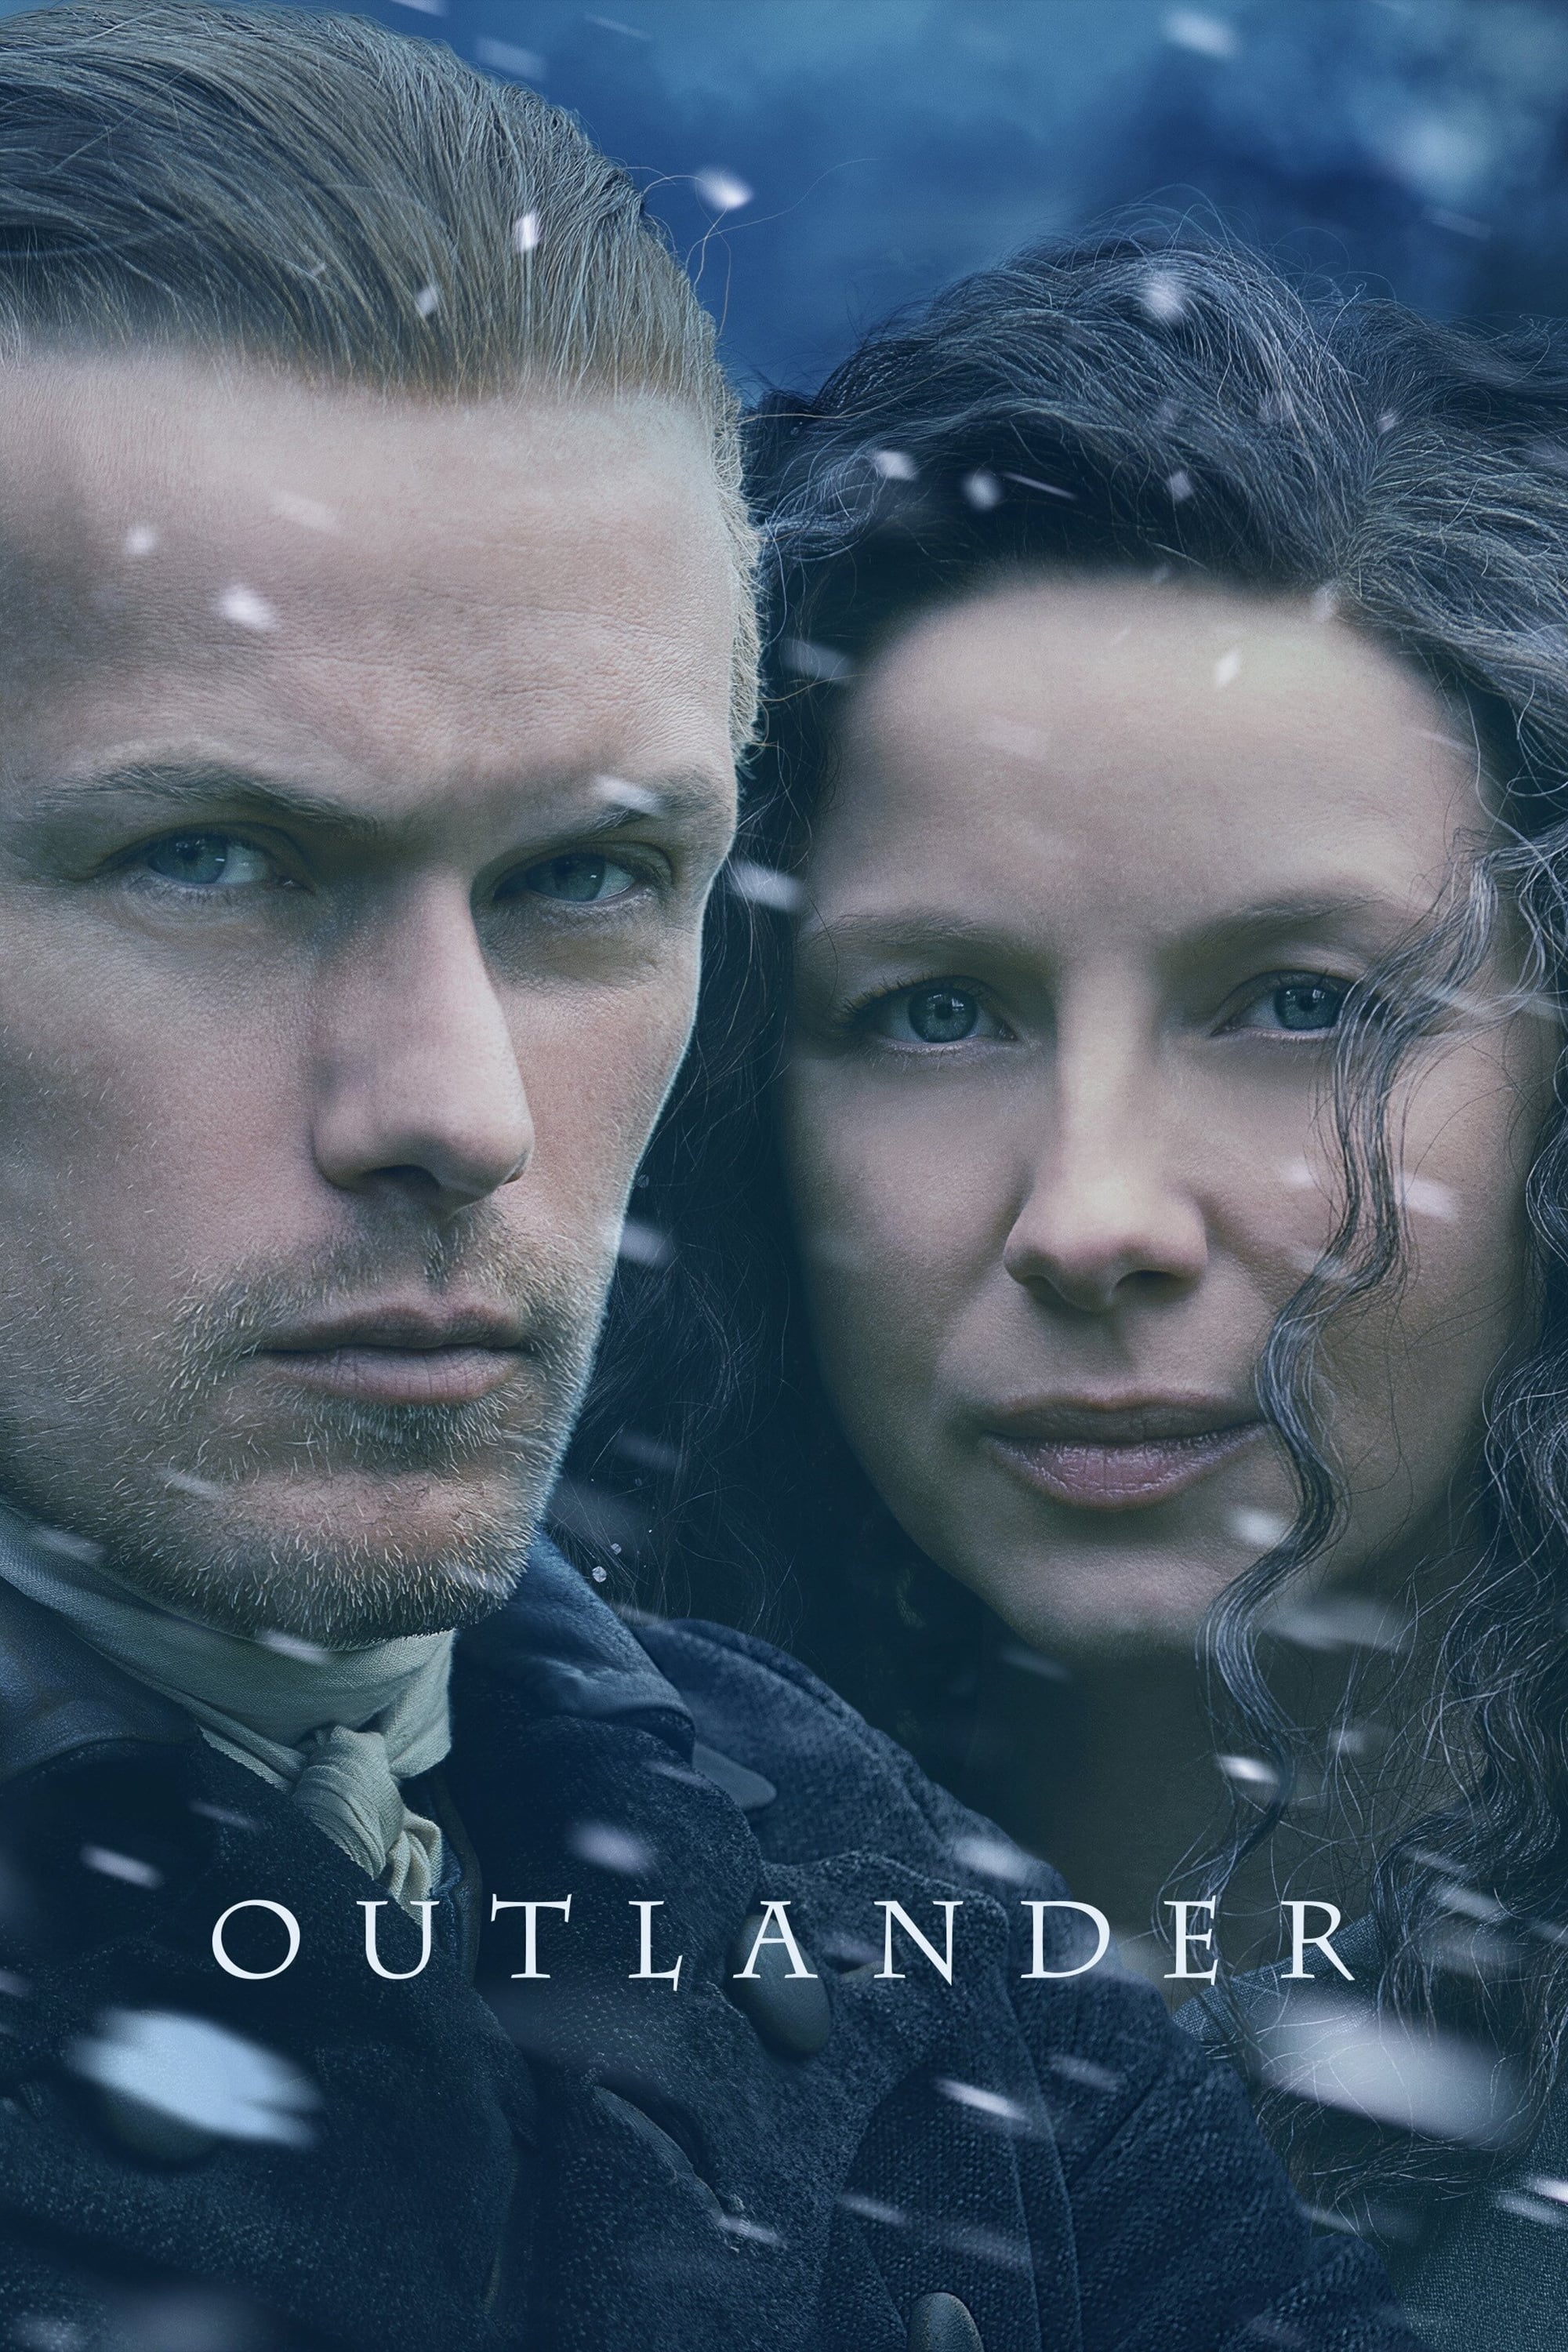 Outlander on Netflix